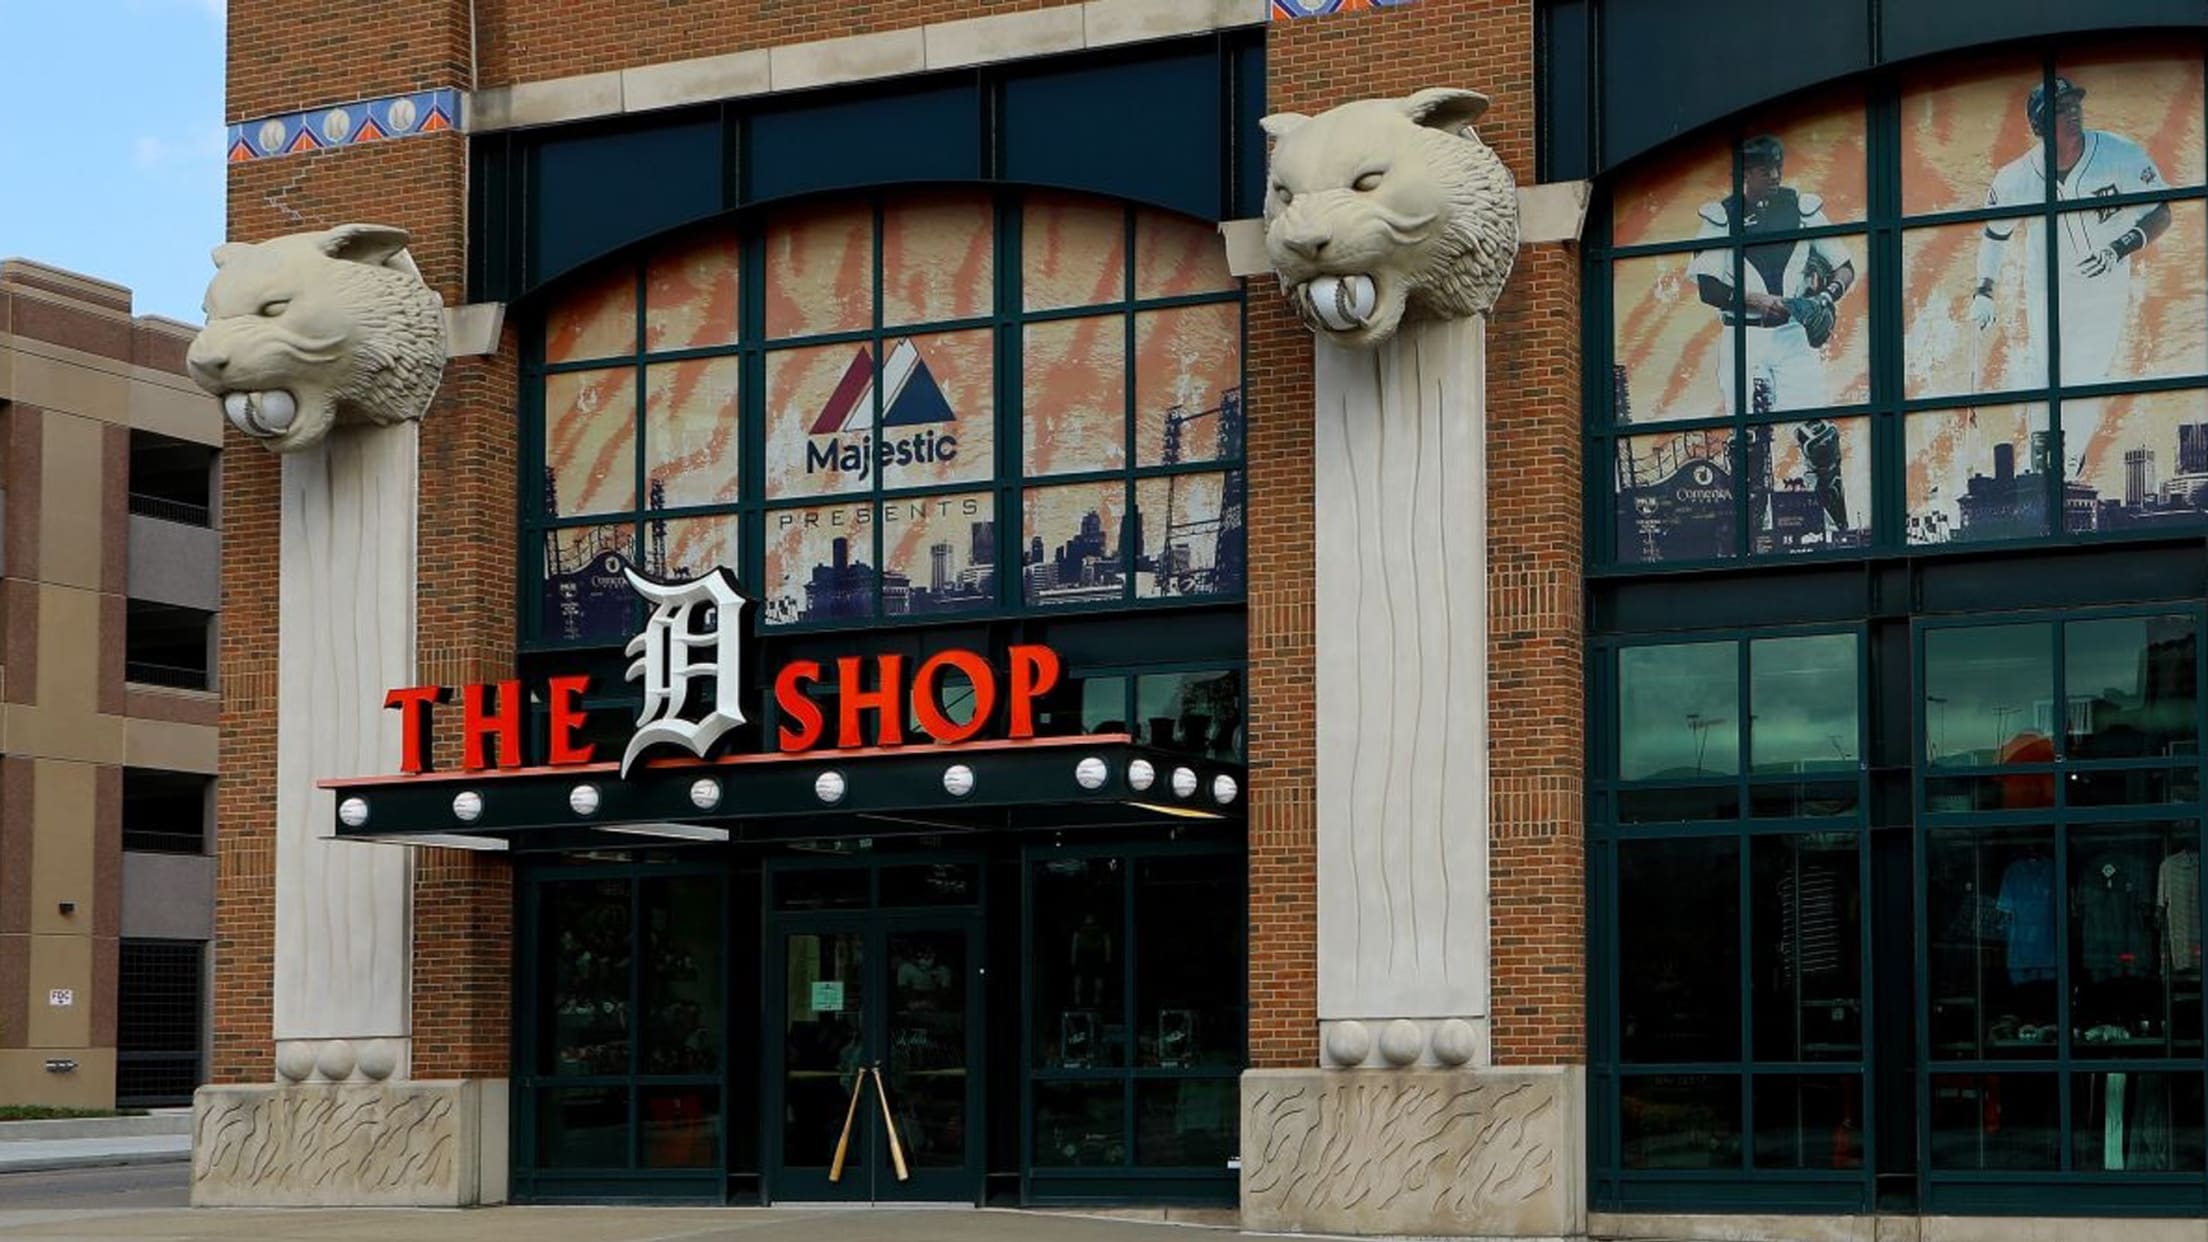 Tiger Stadium (Detroit) – Society for American Baseball Research